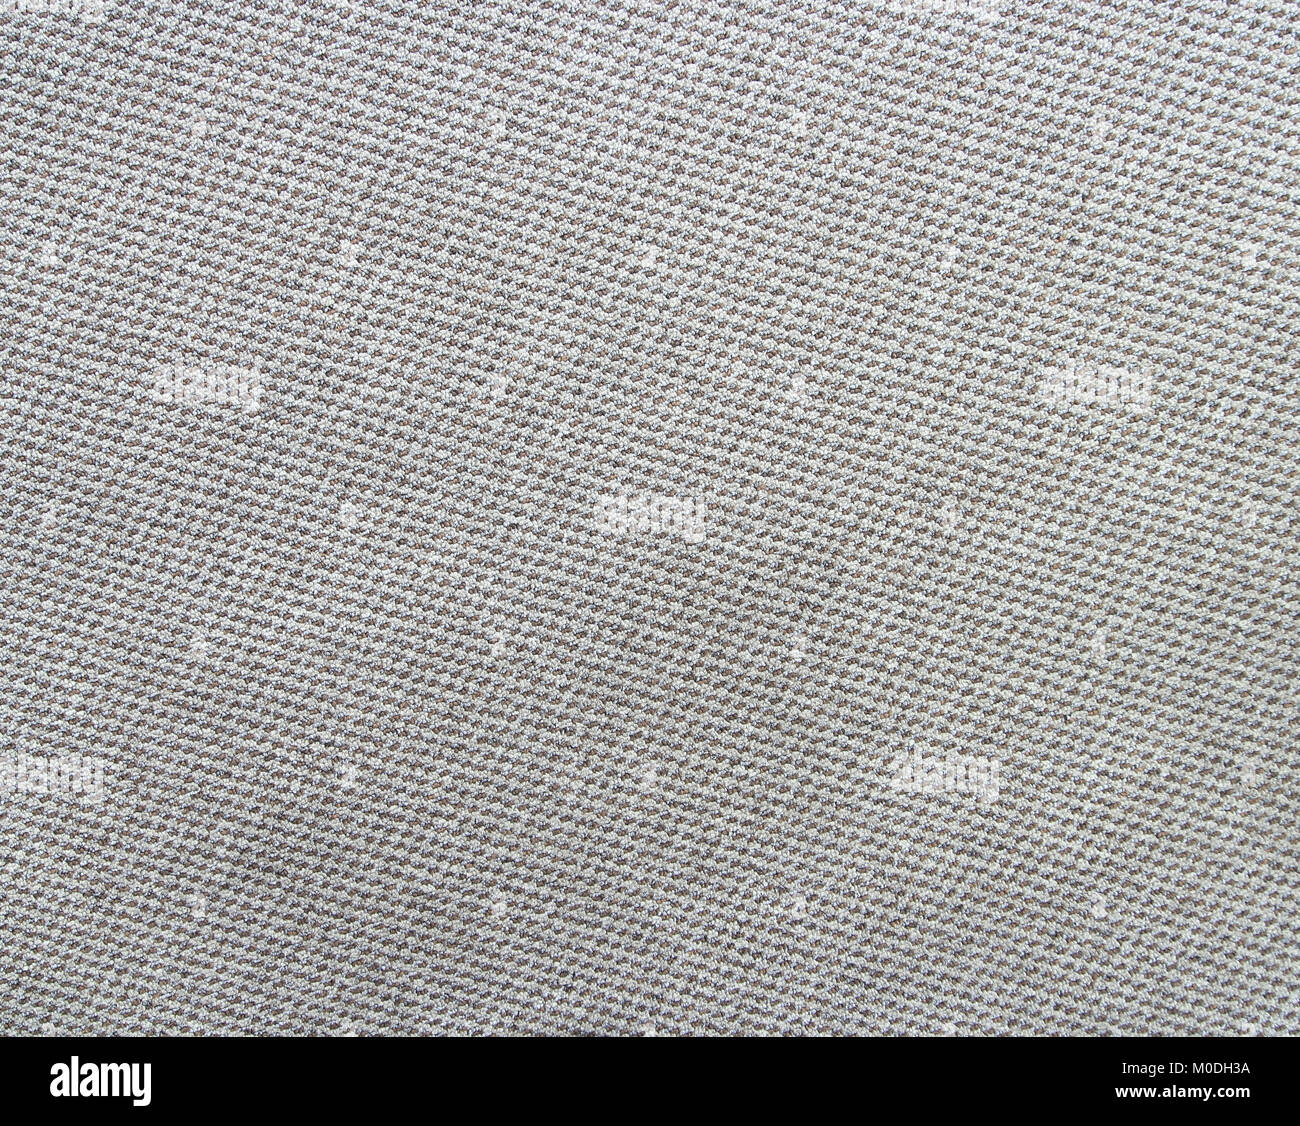 old carpet texture Stock Photo - Alamy